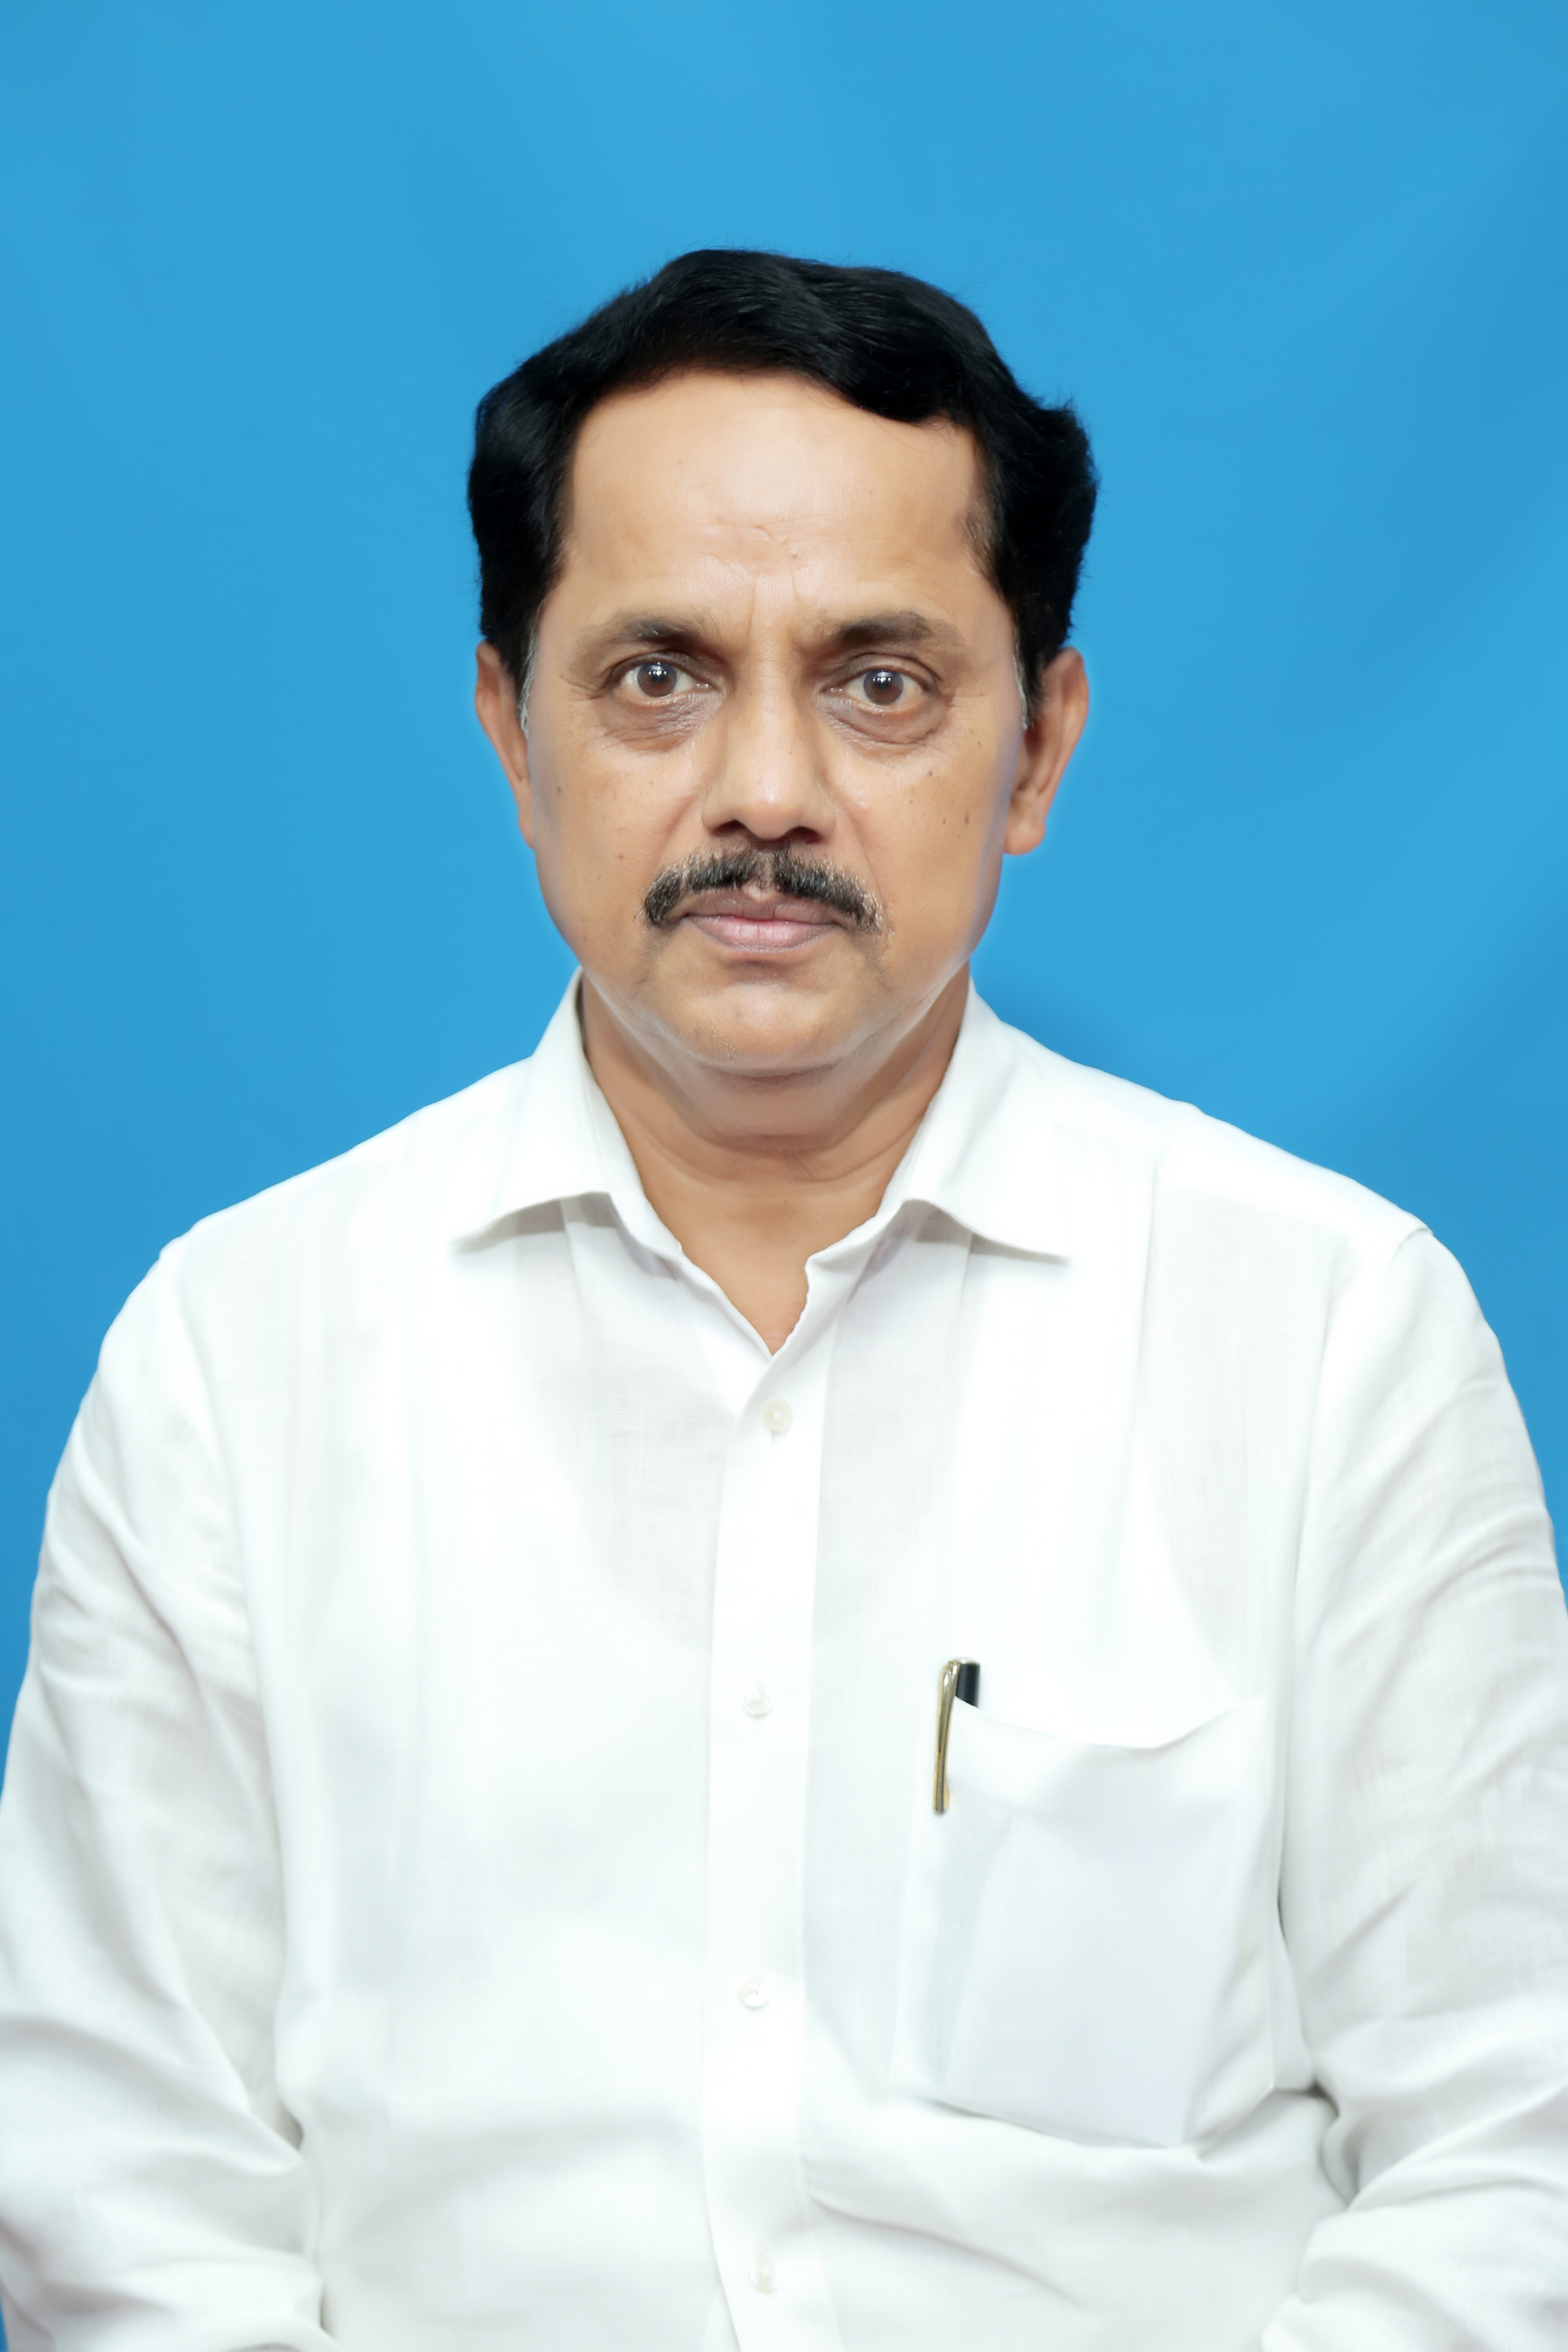 Mr. Chandrakant Samptrao Gavhane